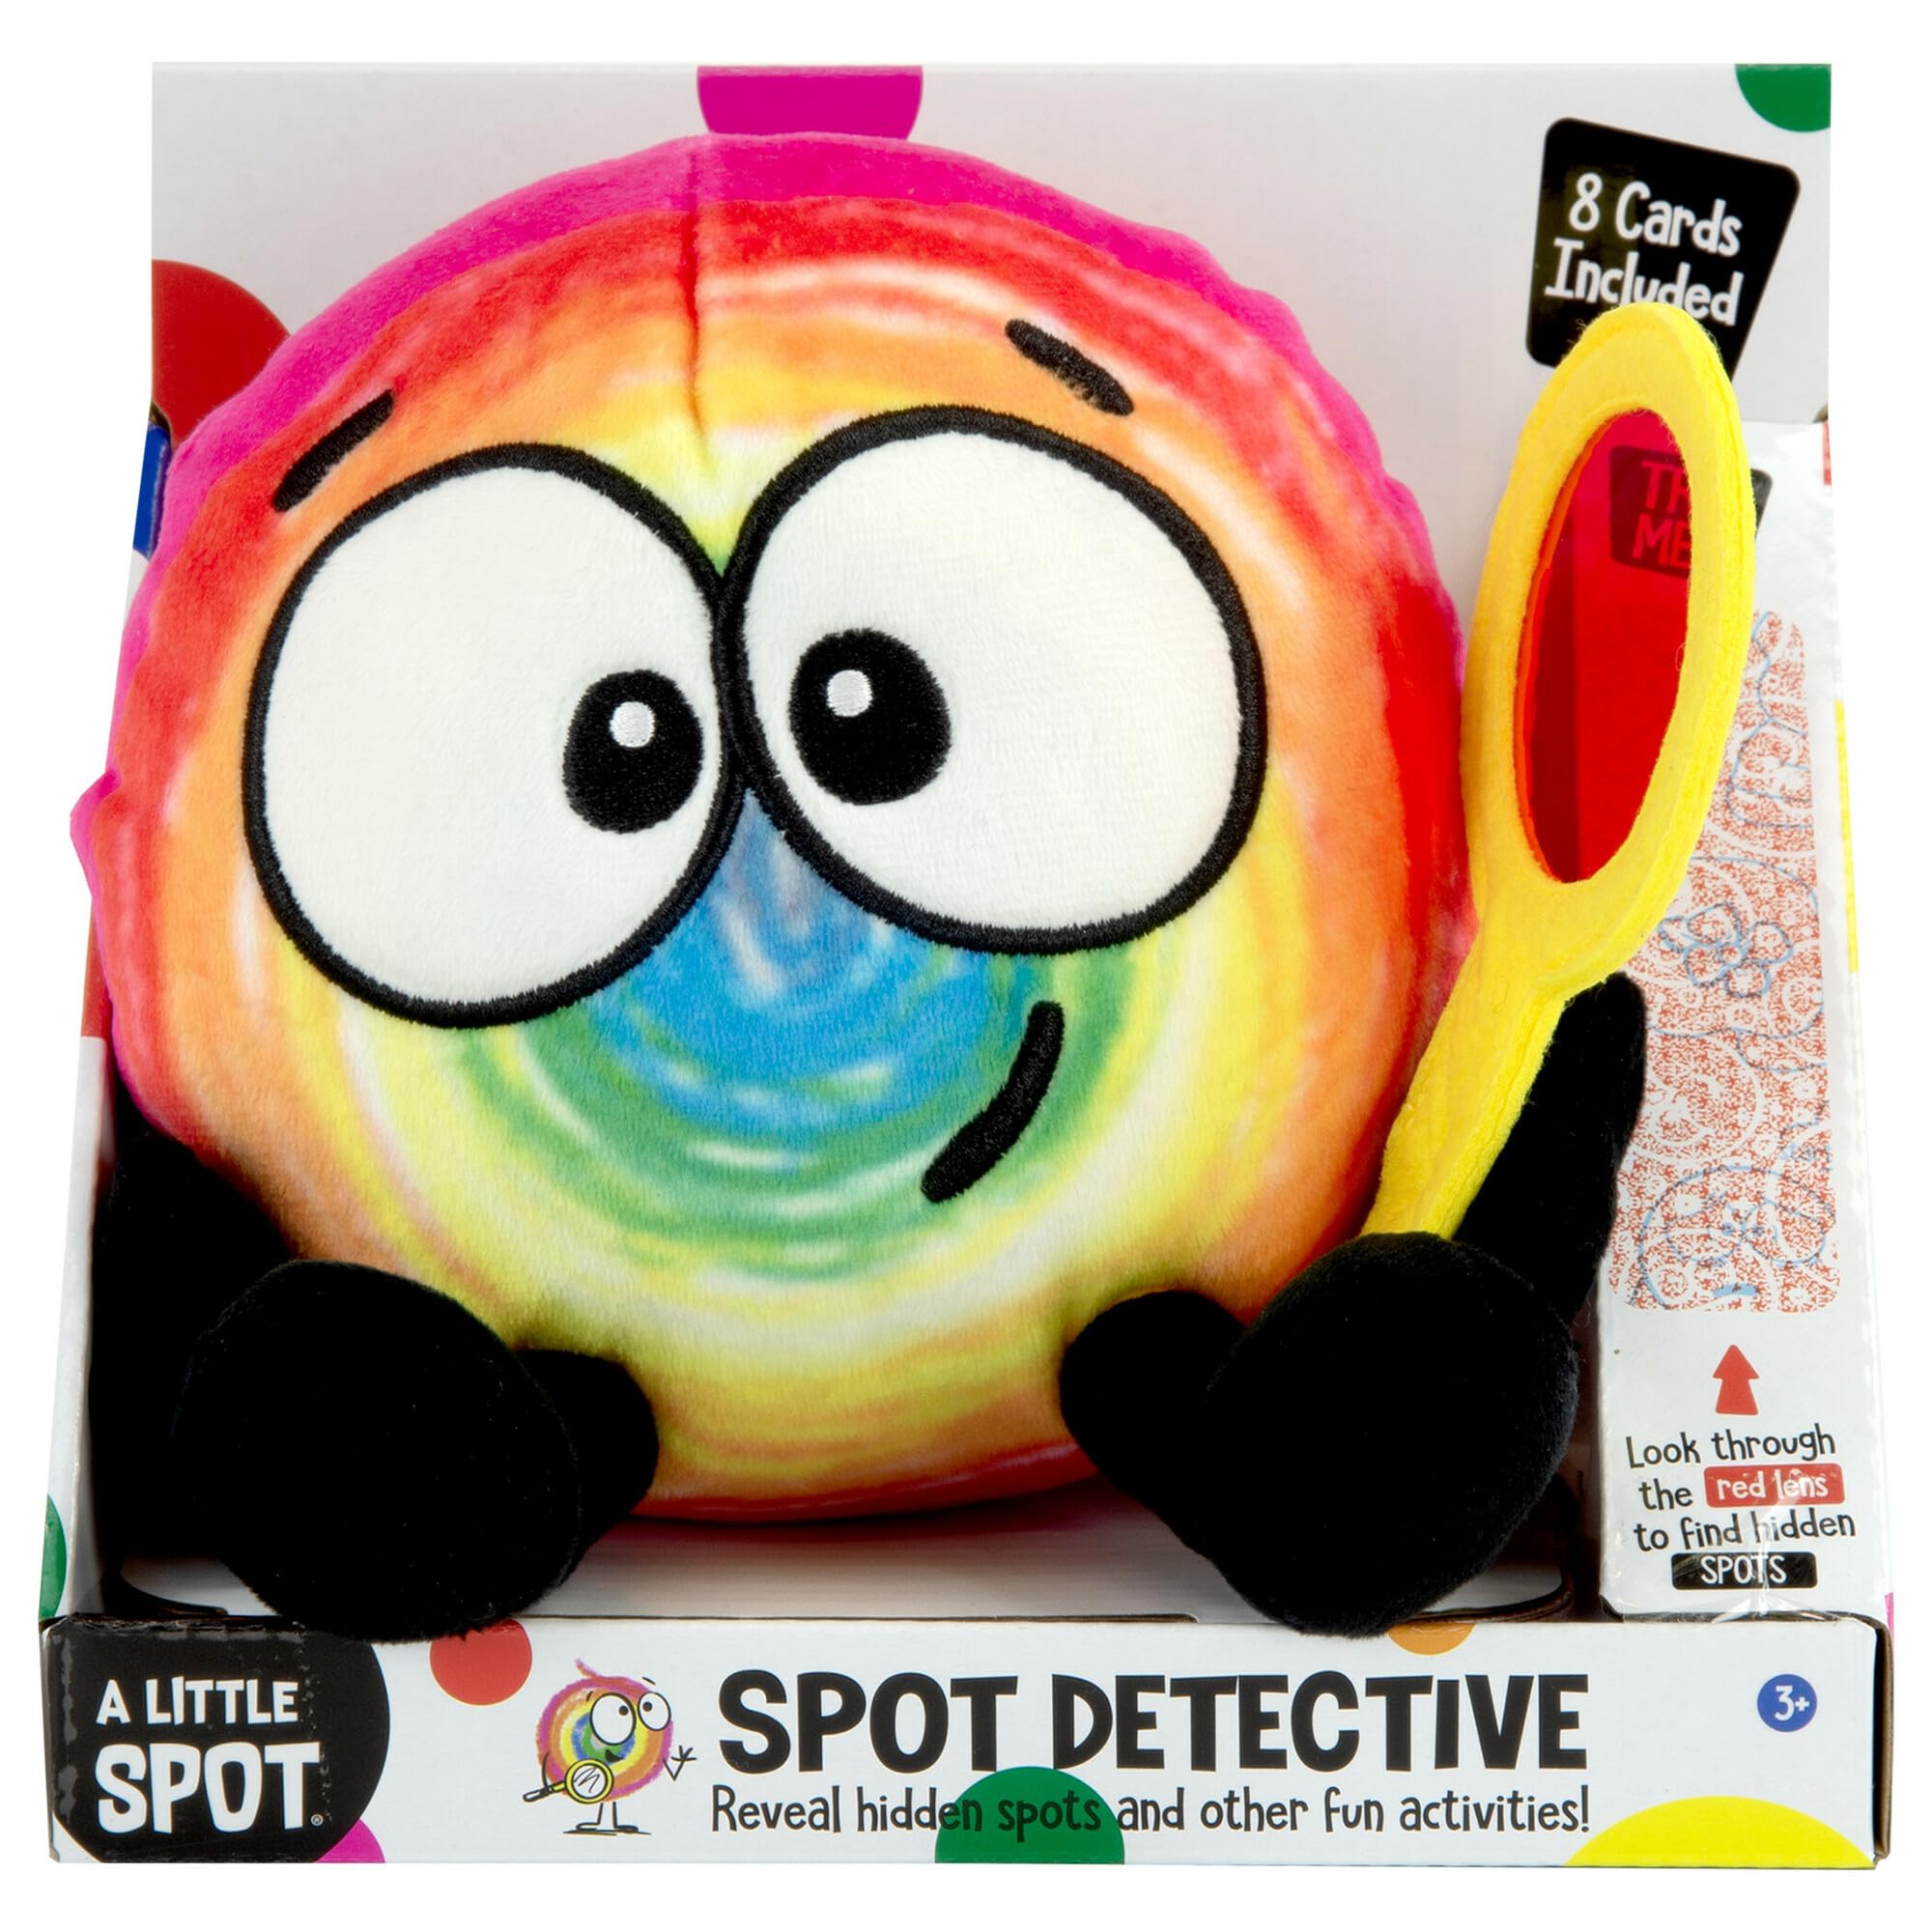 A Little Spot® Spot Detective – Includes Huggable Detective Spot Plush Toy and Kids’ Activity Cards